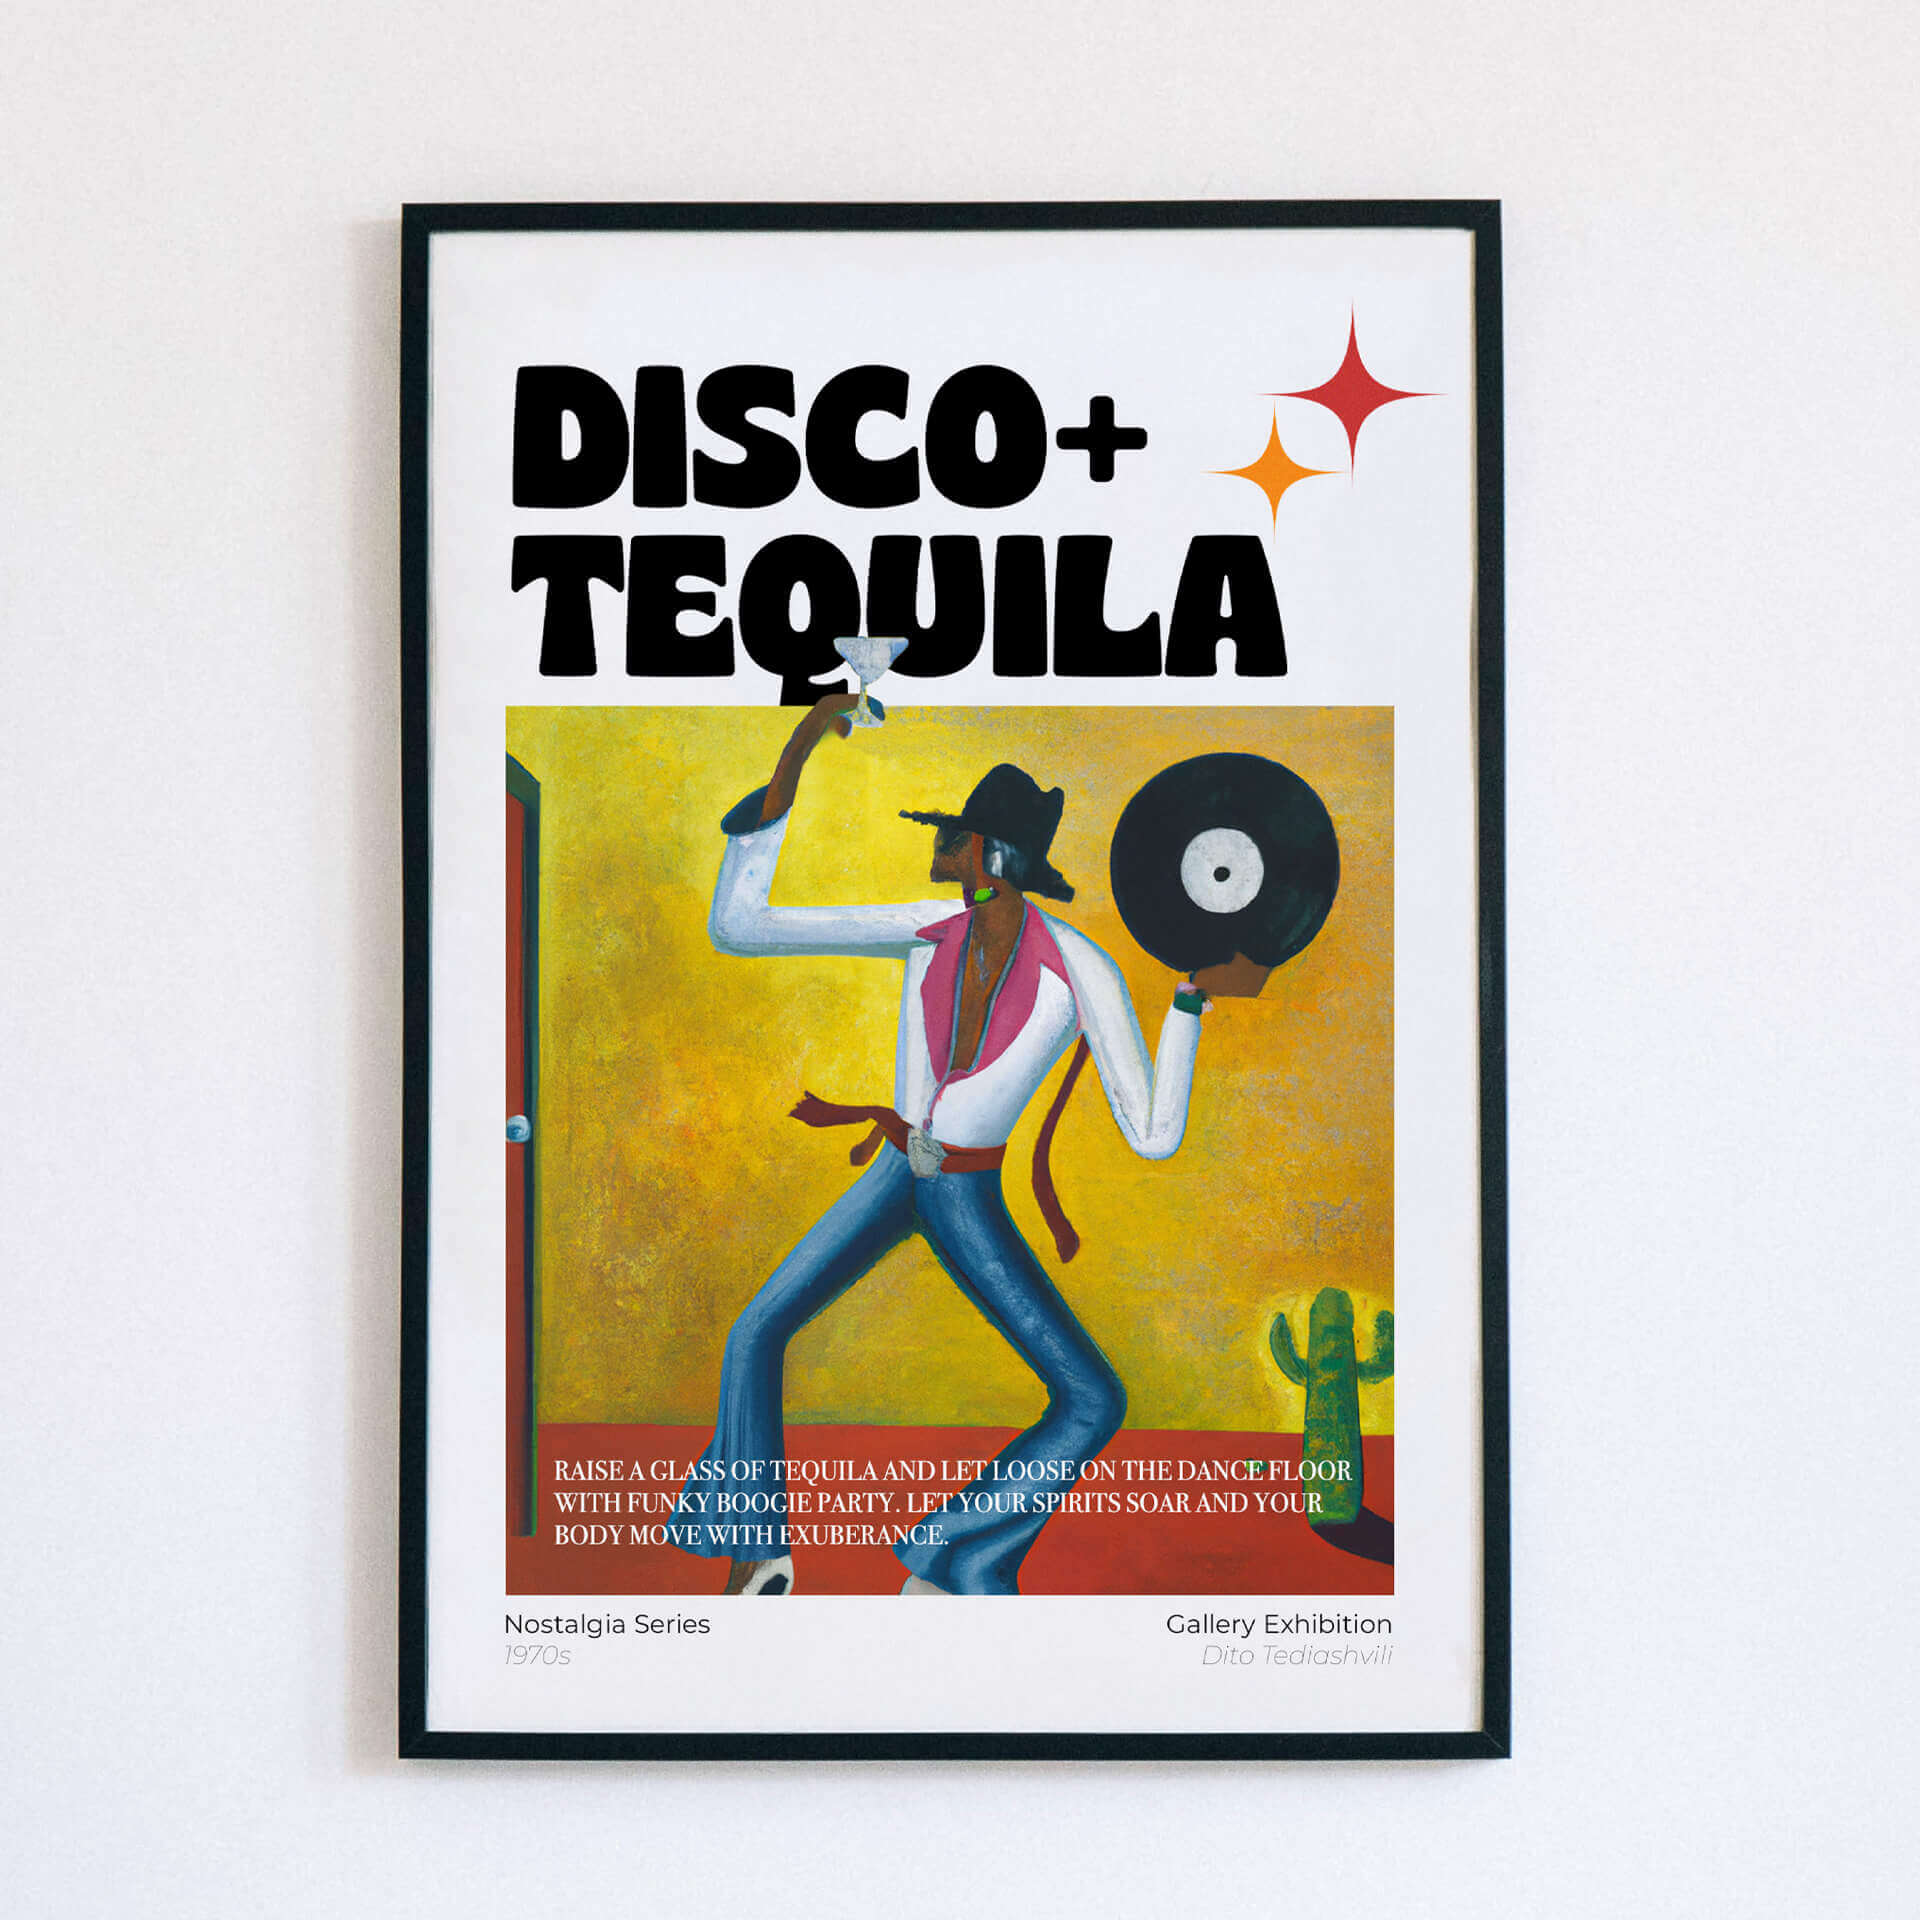 Wall Record Vinyl Decor Records Aesthetic Disco Album Vintage